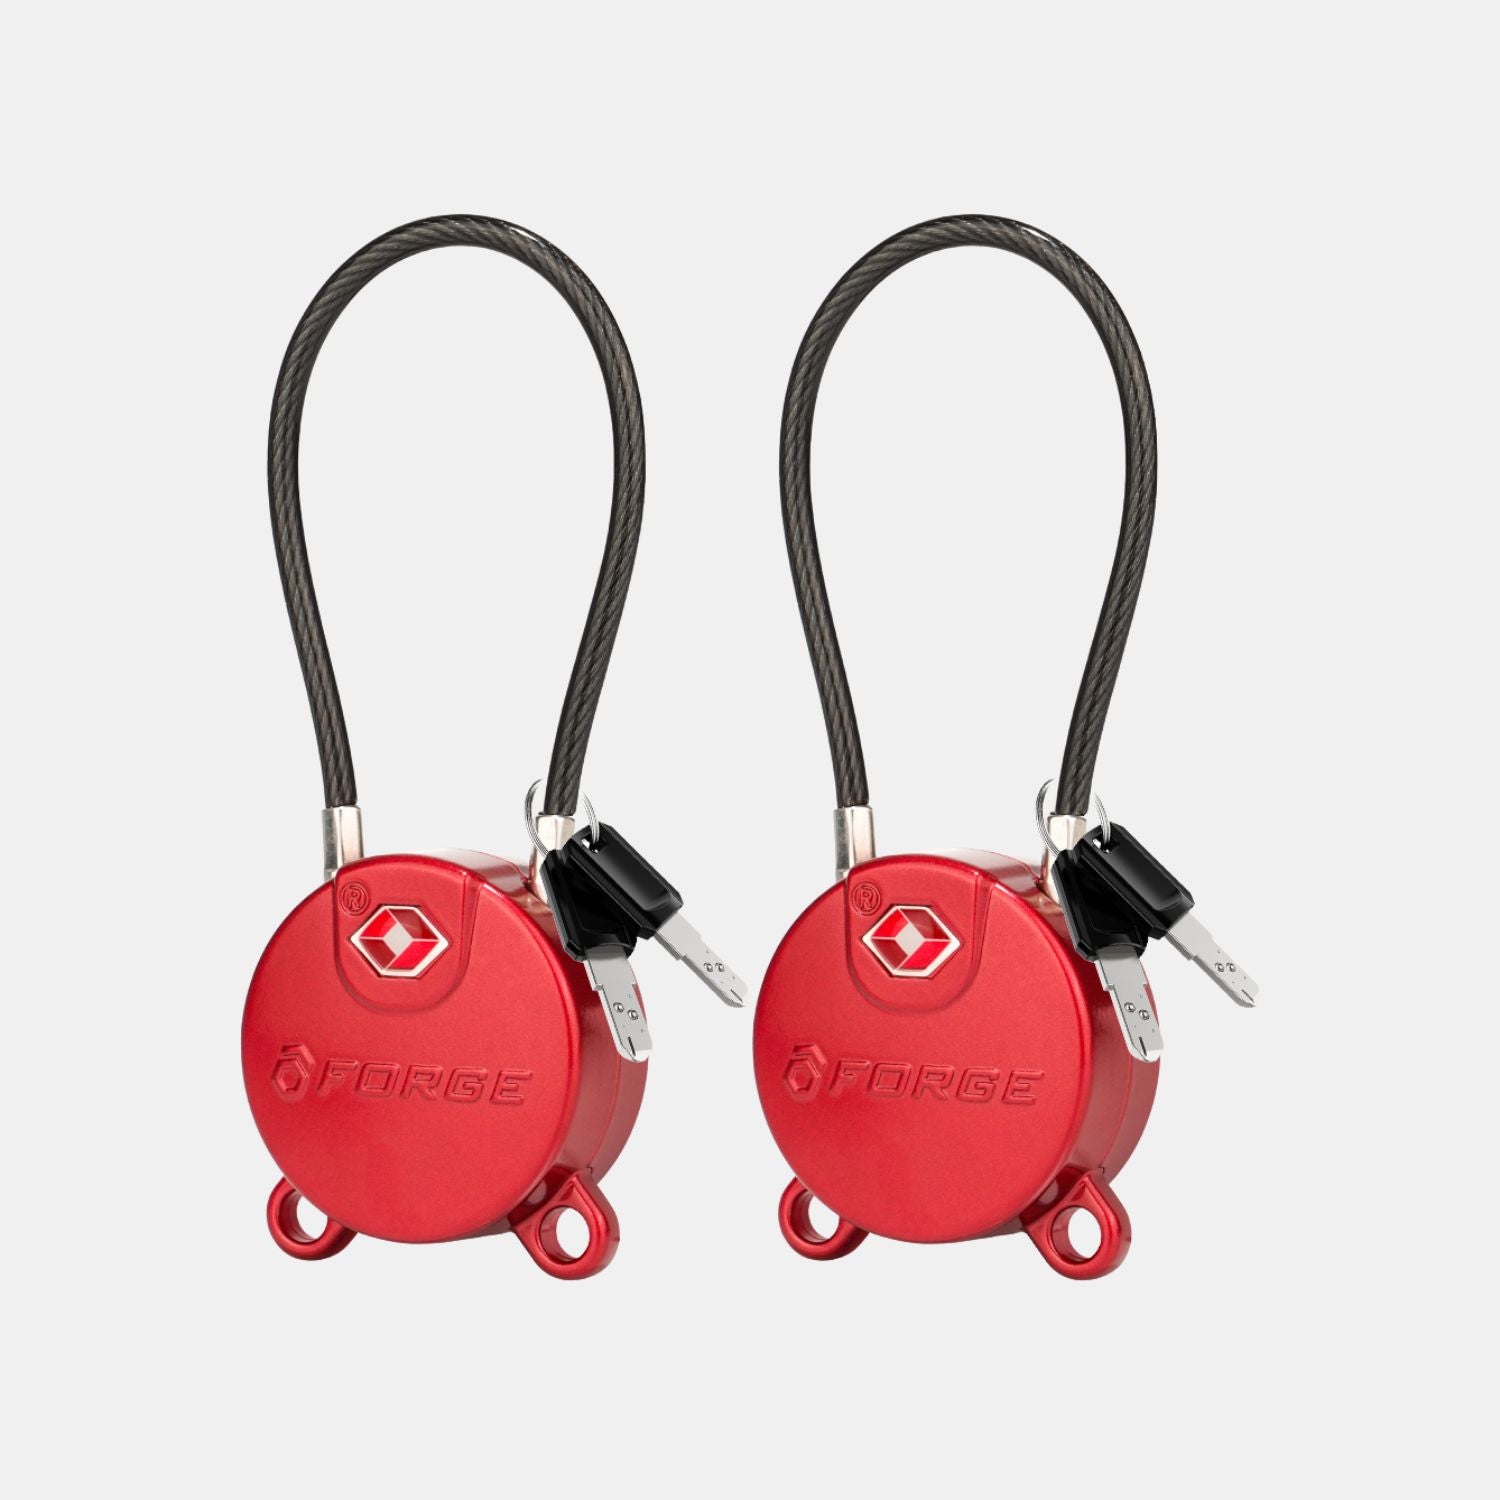 TSA Approved Luggage Locks, Ultra-Secure Dimple Key Travel Locks,TSA006 Key, Red 2 Locks